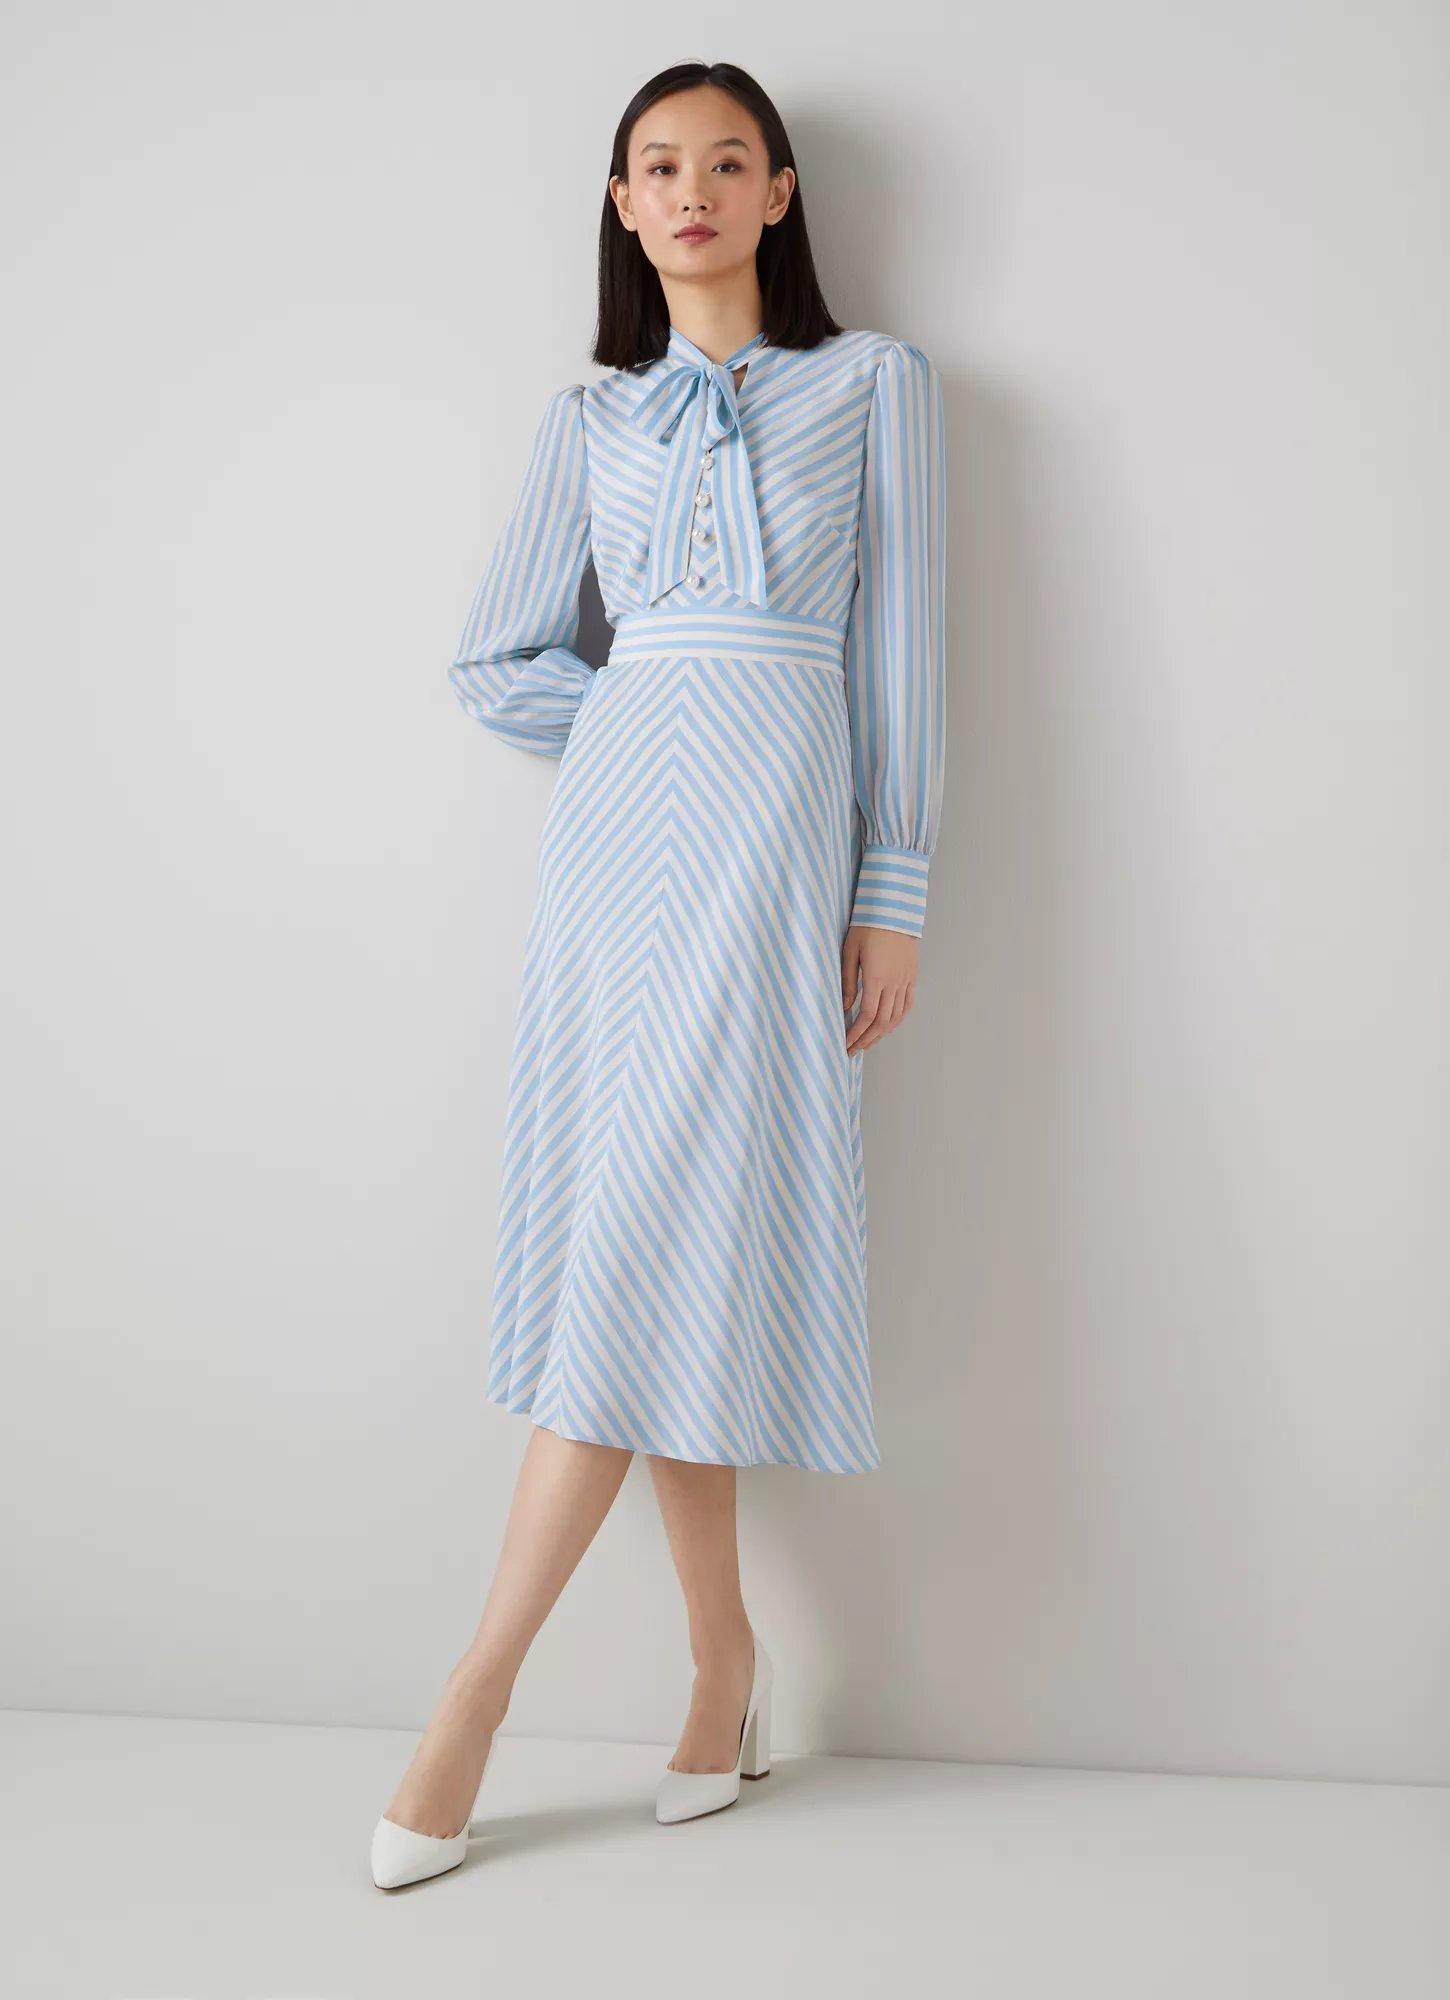 Marcellin Blue and Cream Stripe Silk Dress, £300